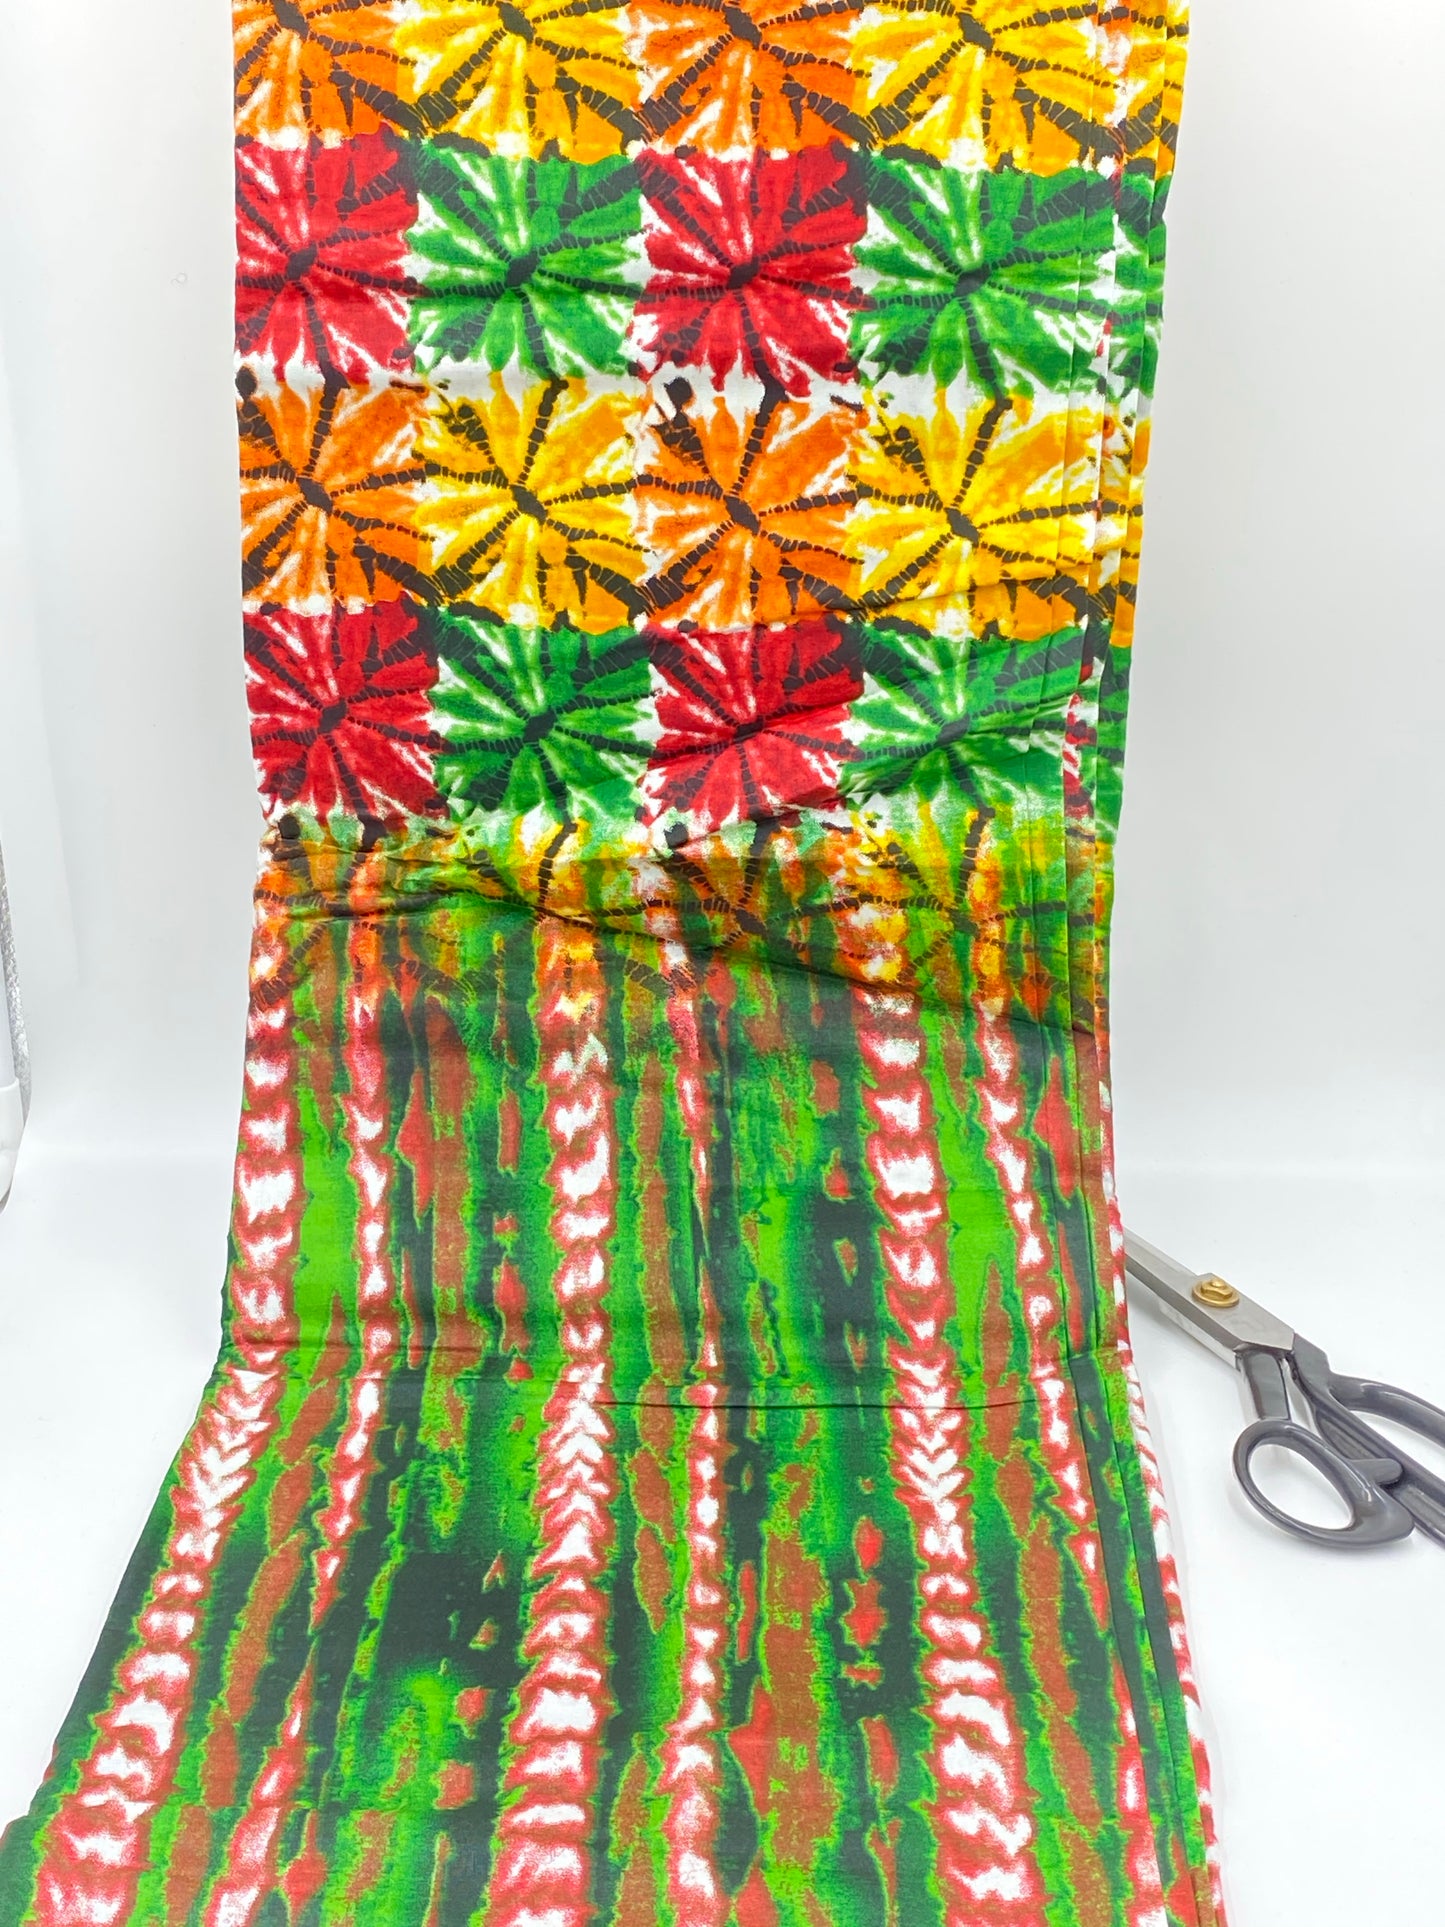 African fabric 100% cotton, African print Tye dye fabric 6 yards